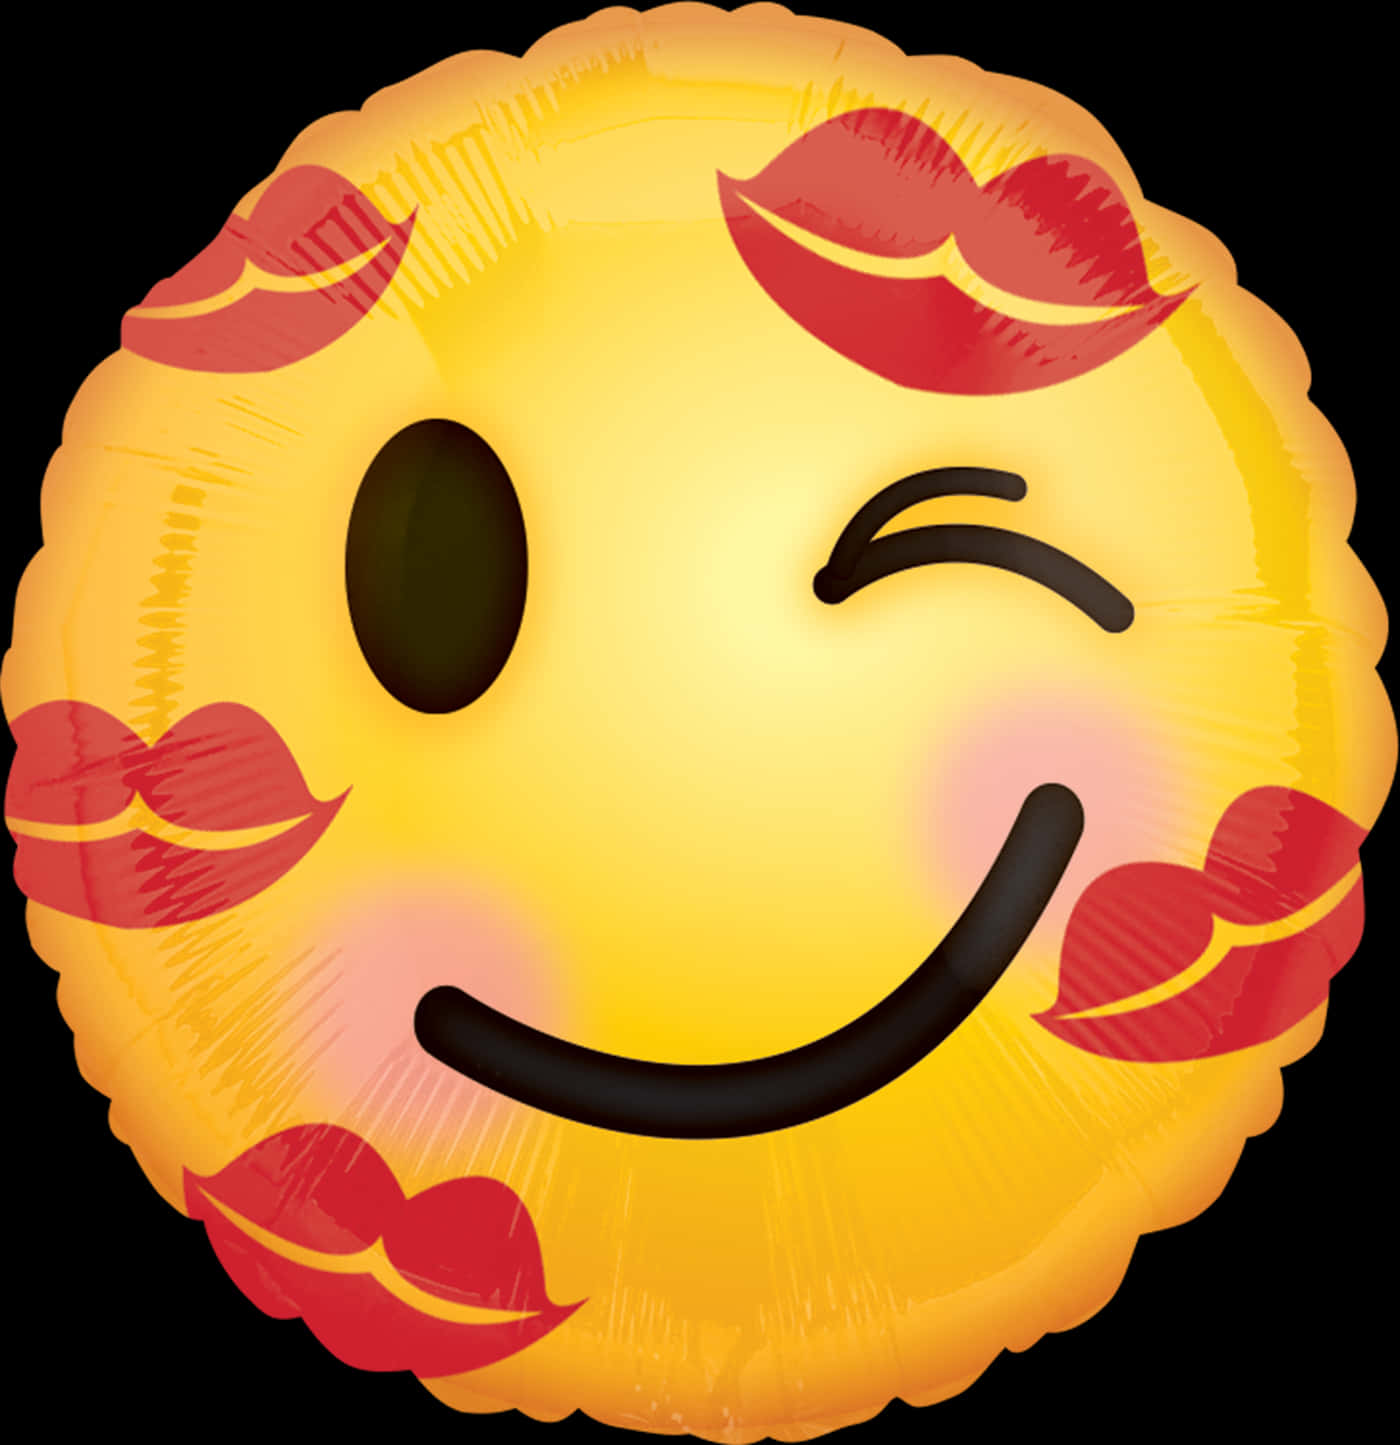 Winking Kiss Emoji Balloon PNG image